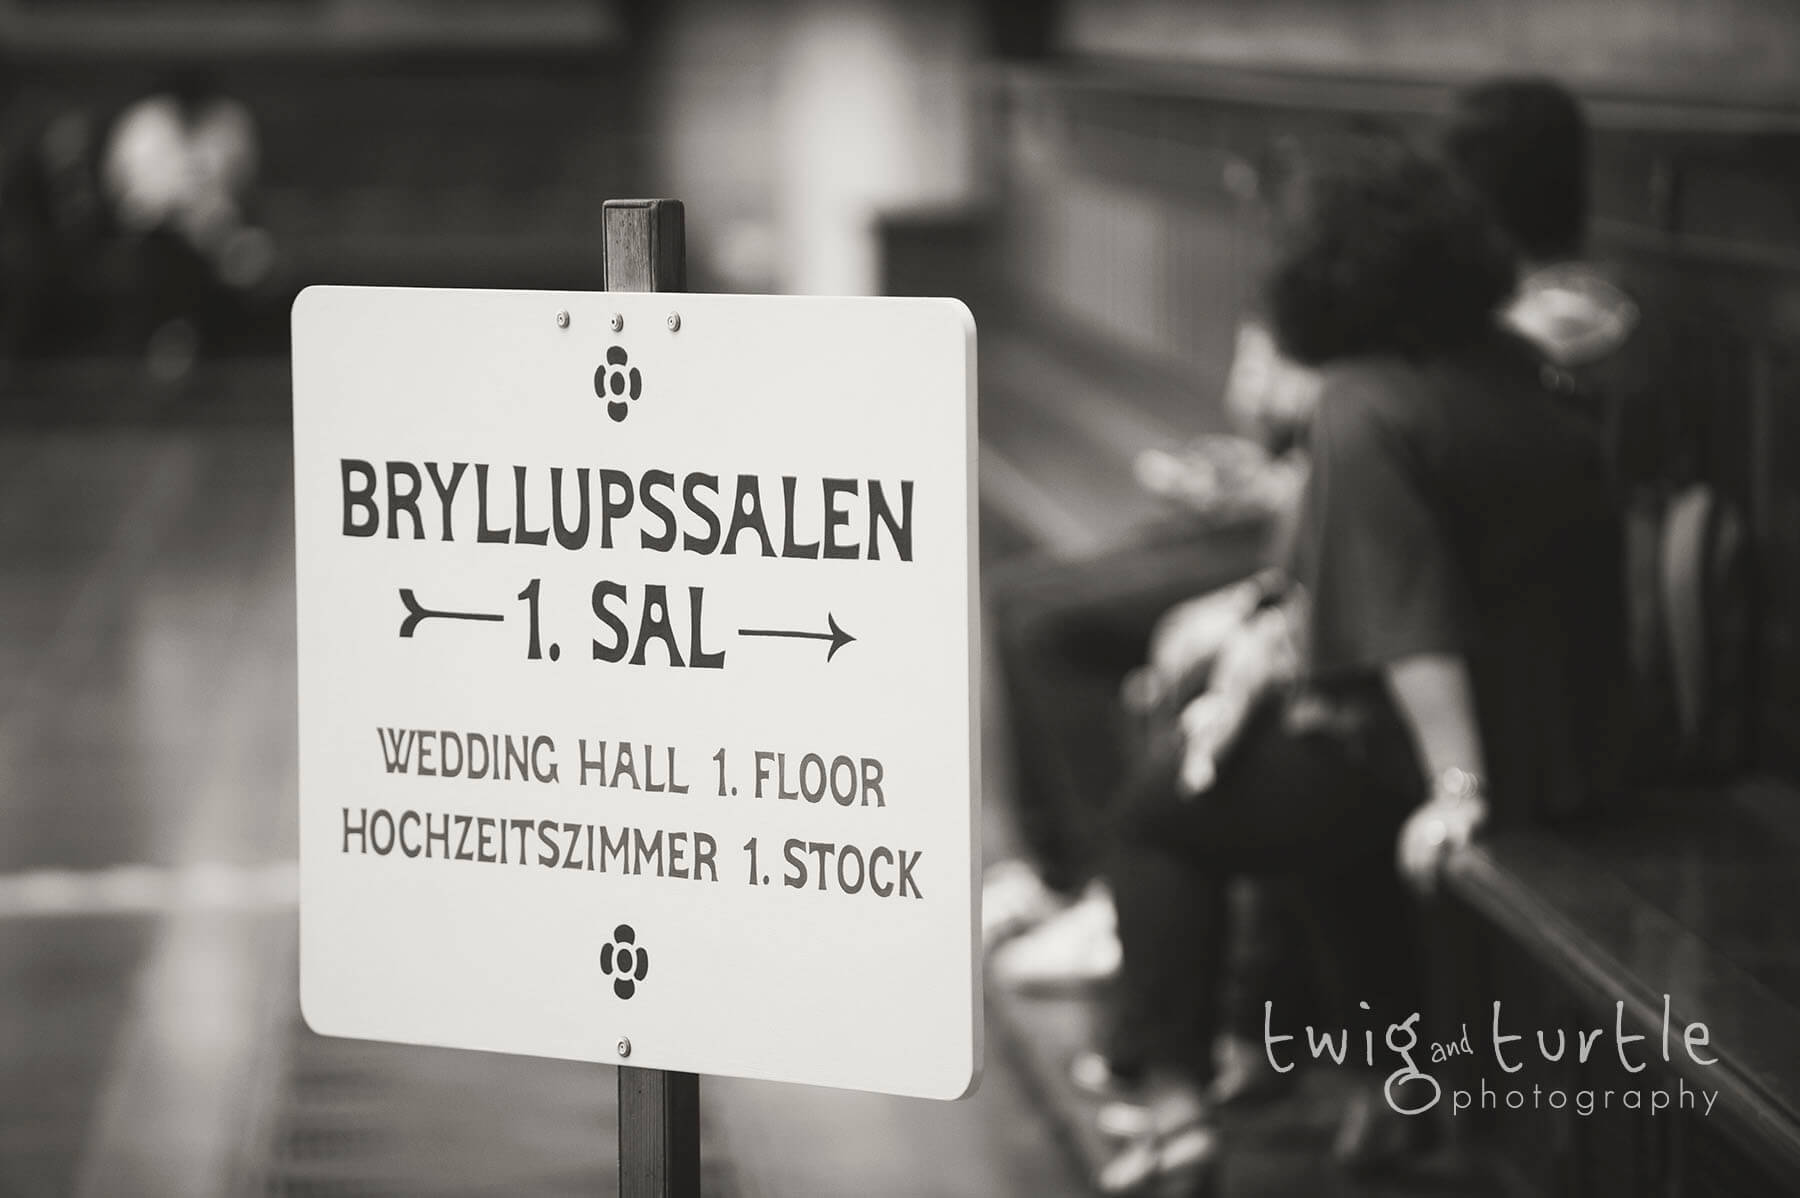 Copenhagen City Hall wedding, Københavns Rådhus bryllup, destination wedding, Copenhagen destination wedding, copenhagen city hall